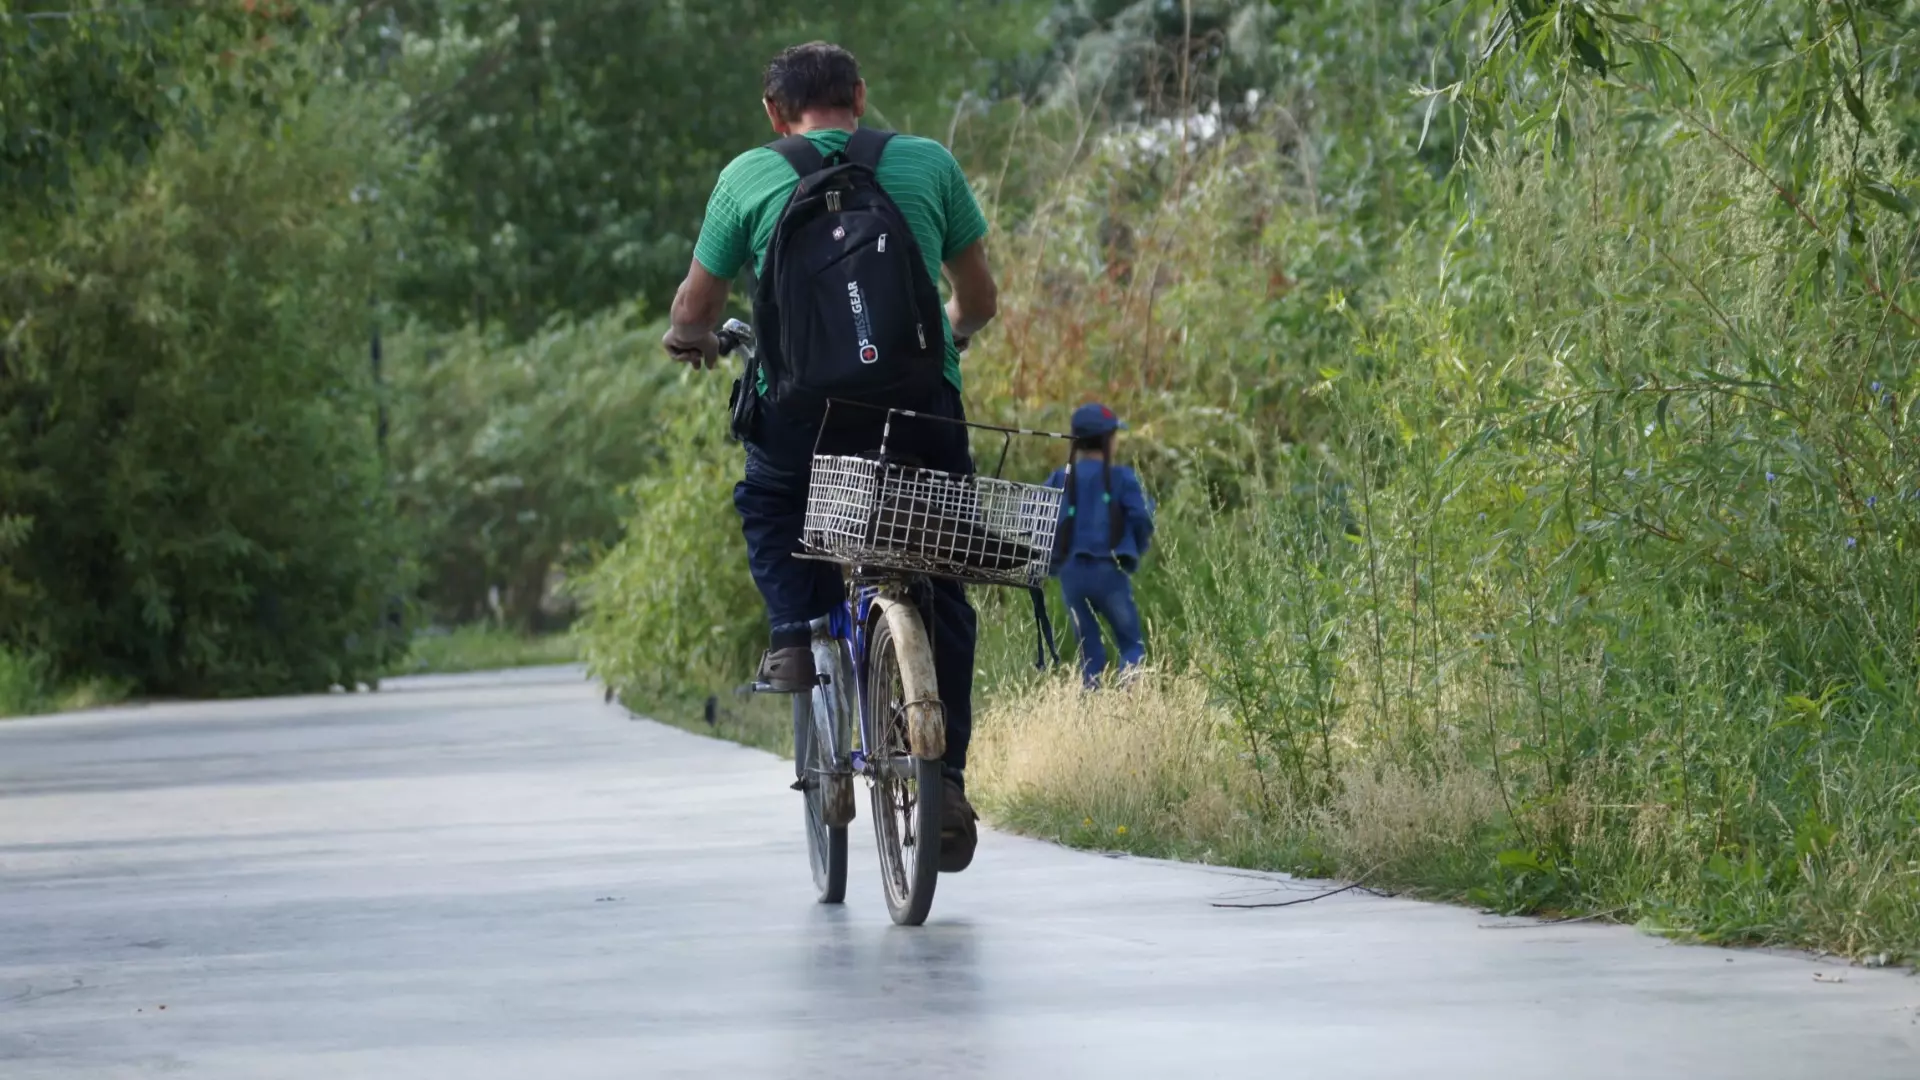 54 велосипеда украли у нижегородцев